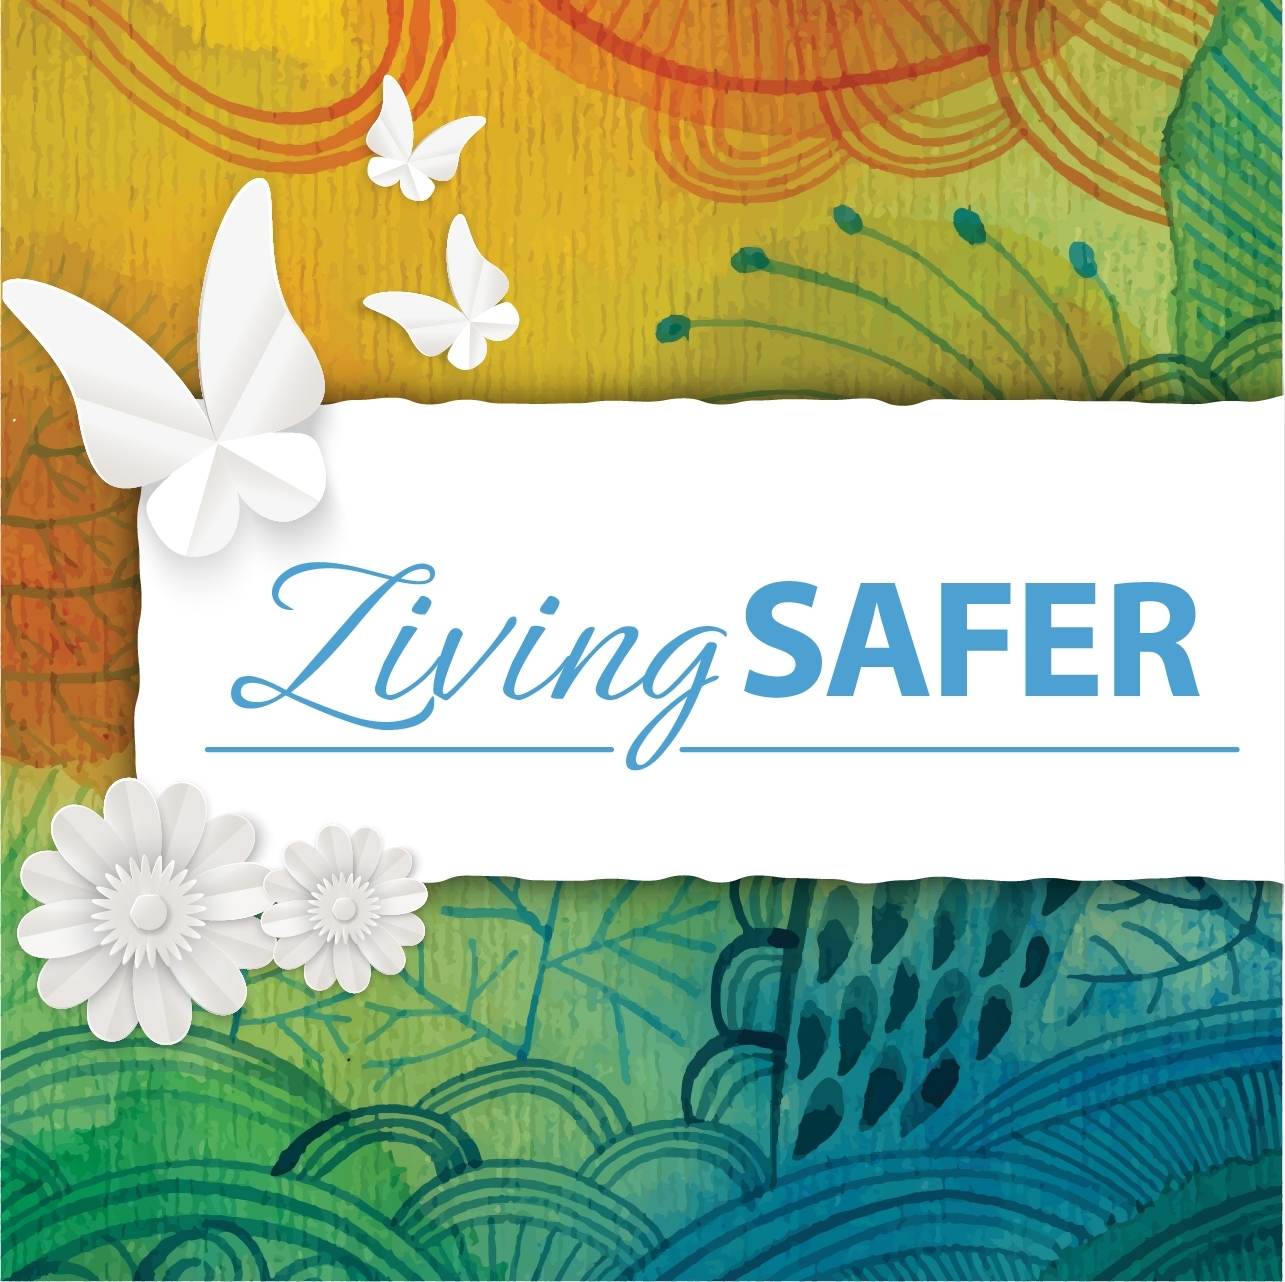 Living Safer Graphic